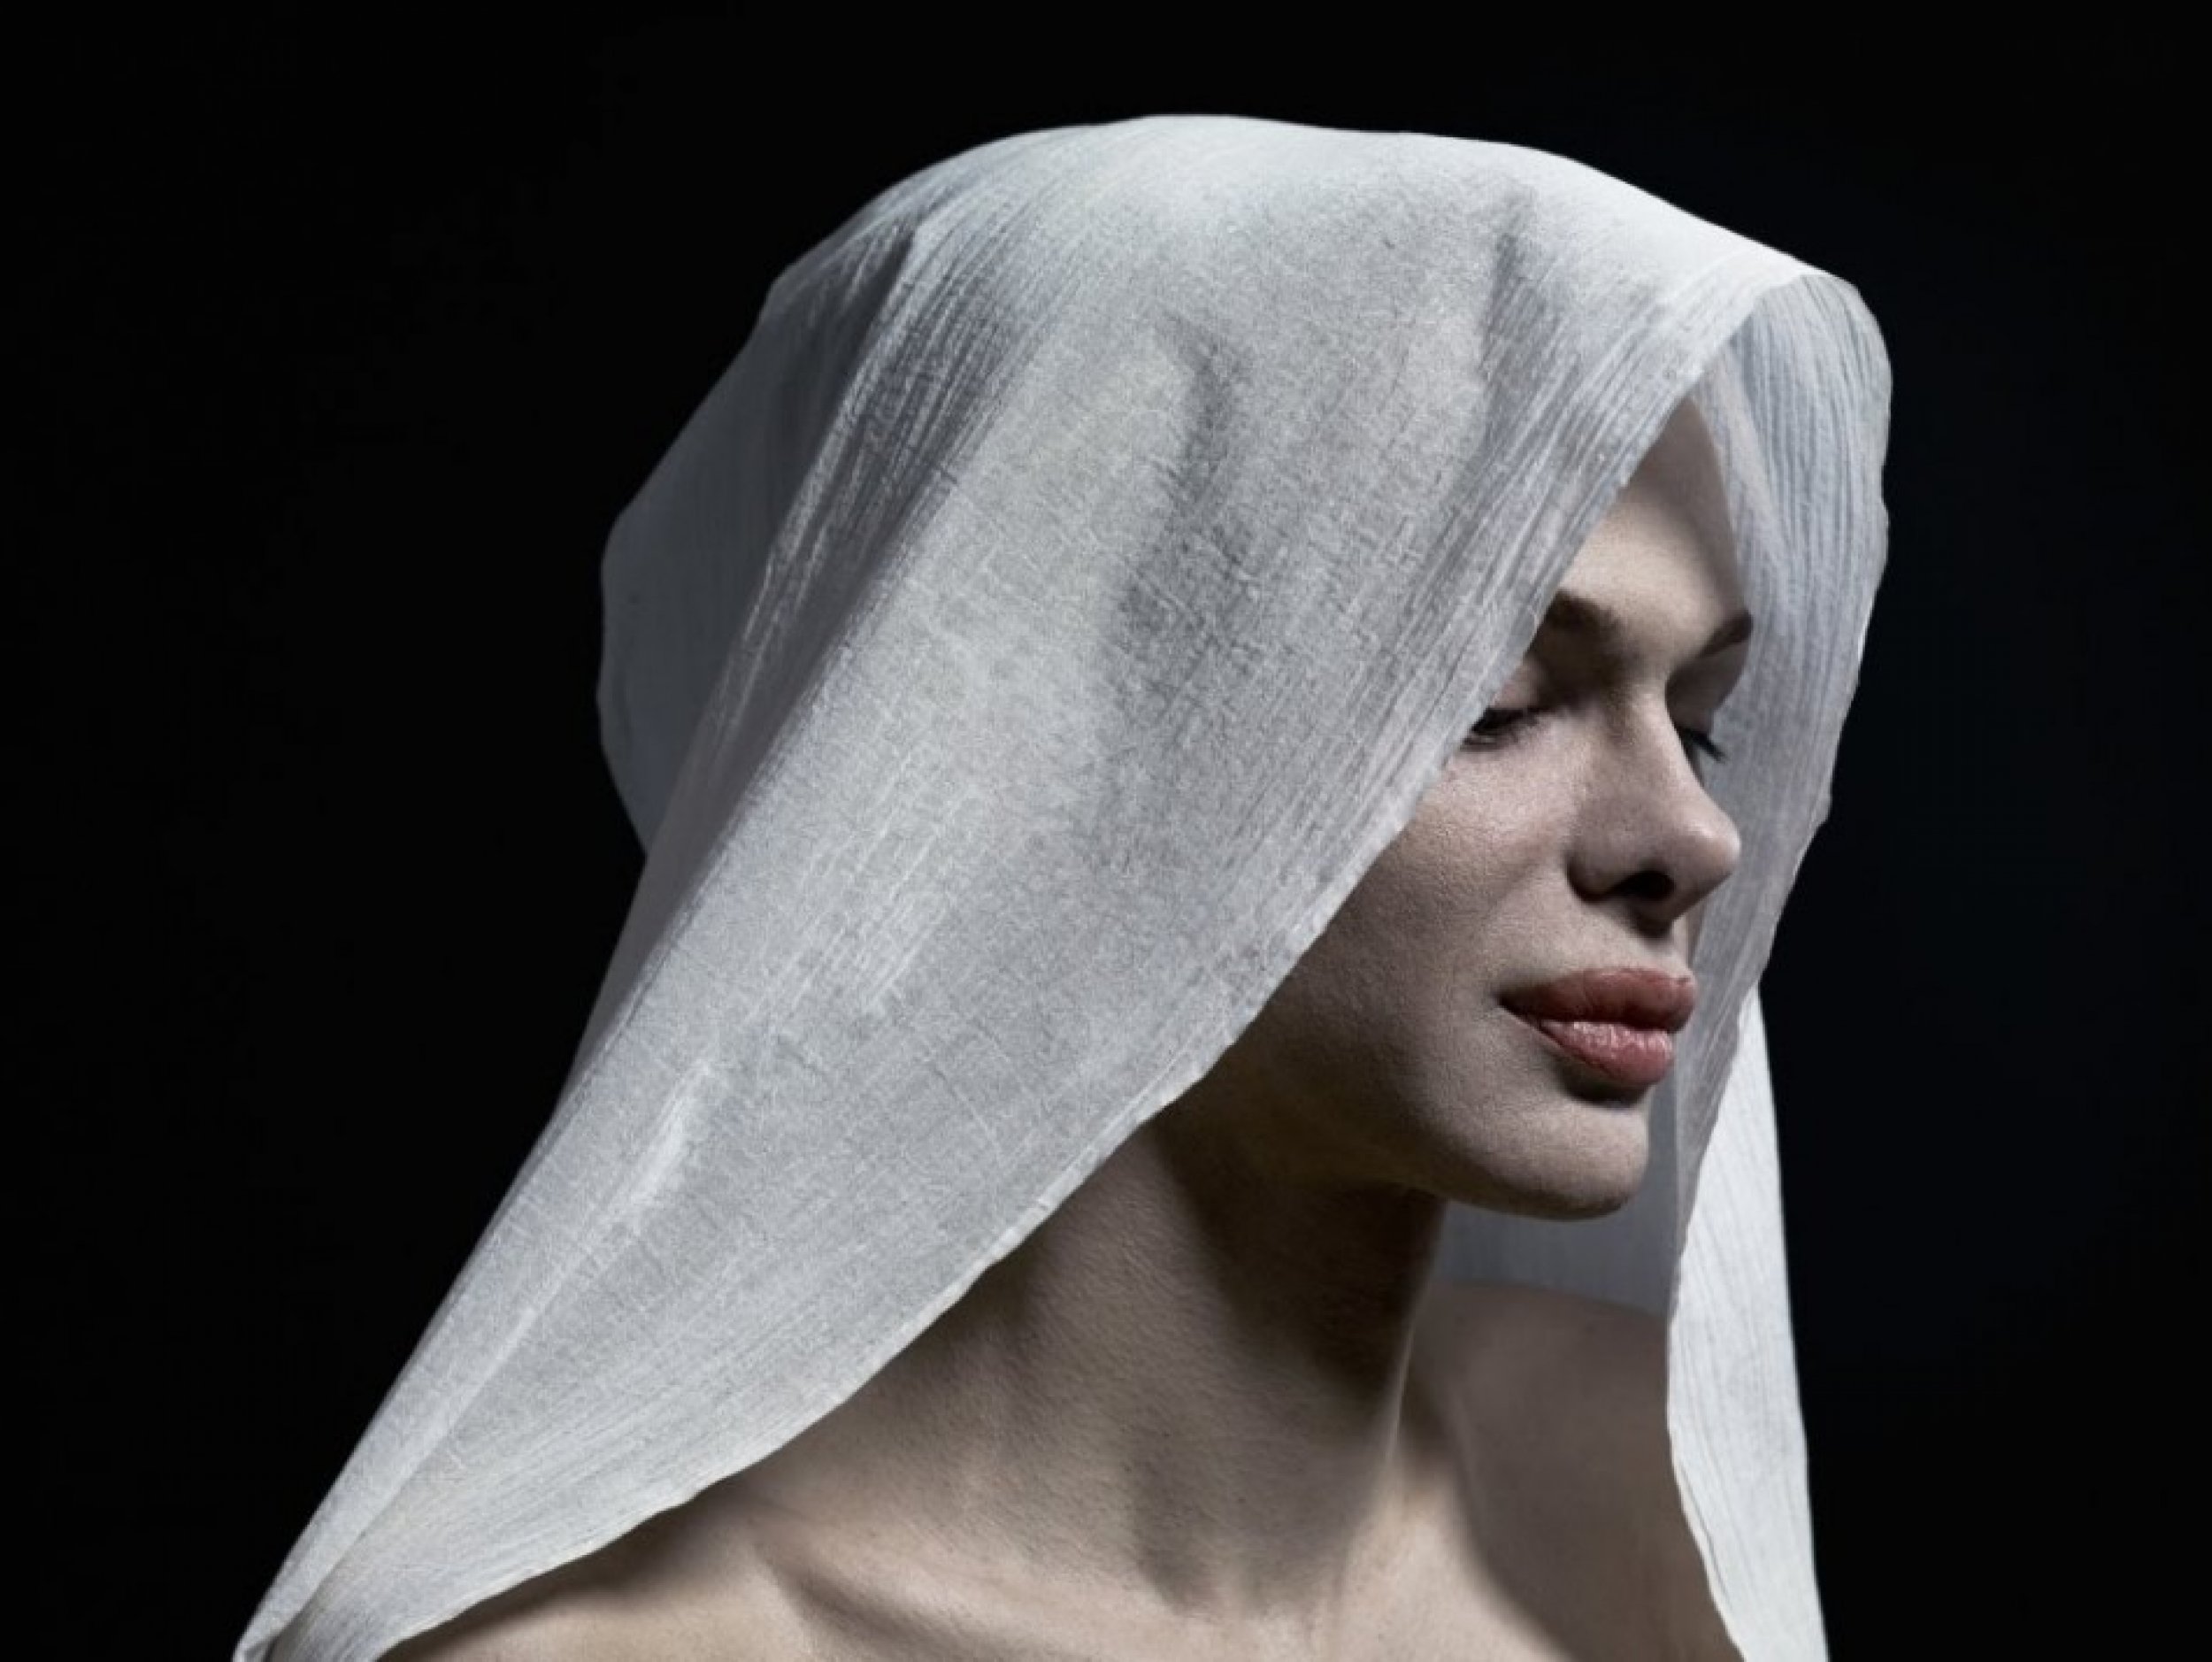 Photographers Extreme plastic surgery images questions true beauty PHOTOS